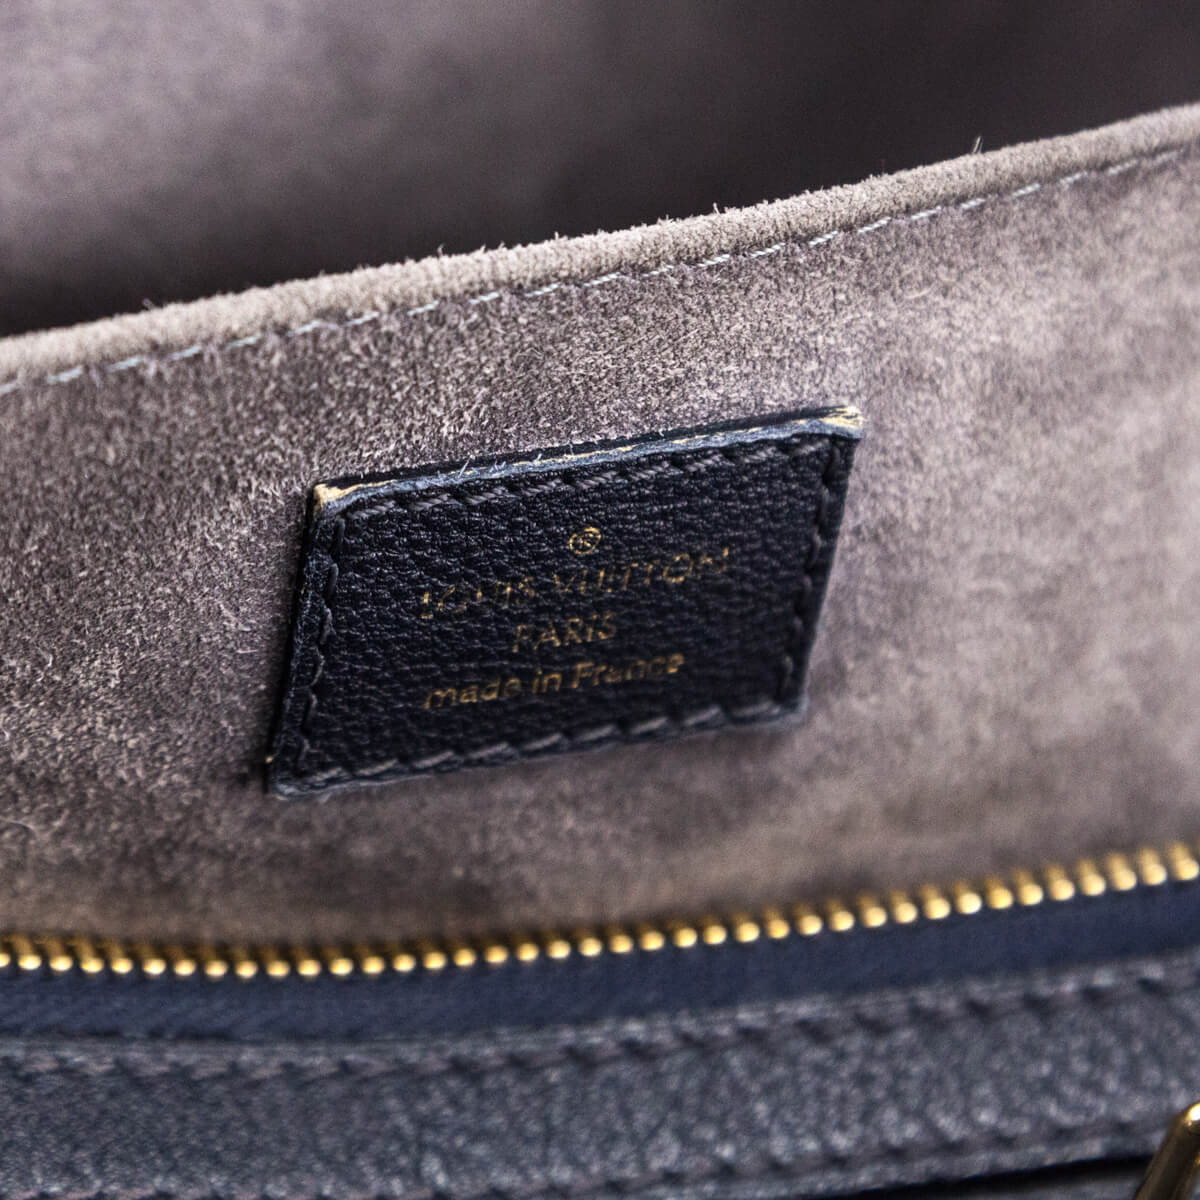 Louis Vuitton & Sofia Coppola Handbag for Sale in South Hempstead